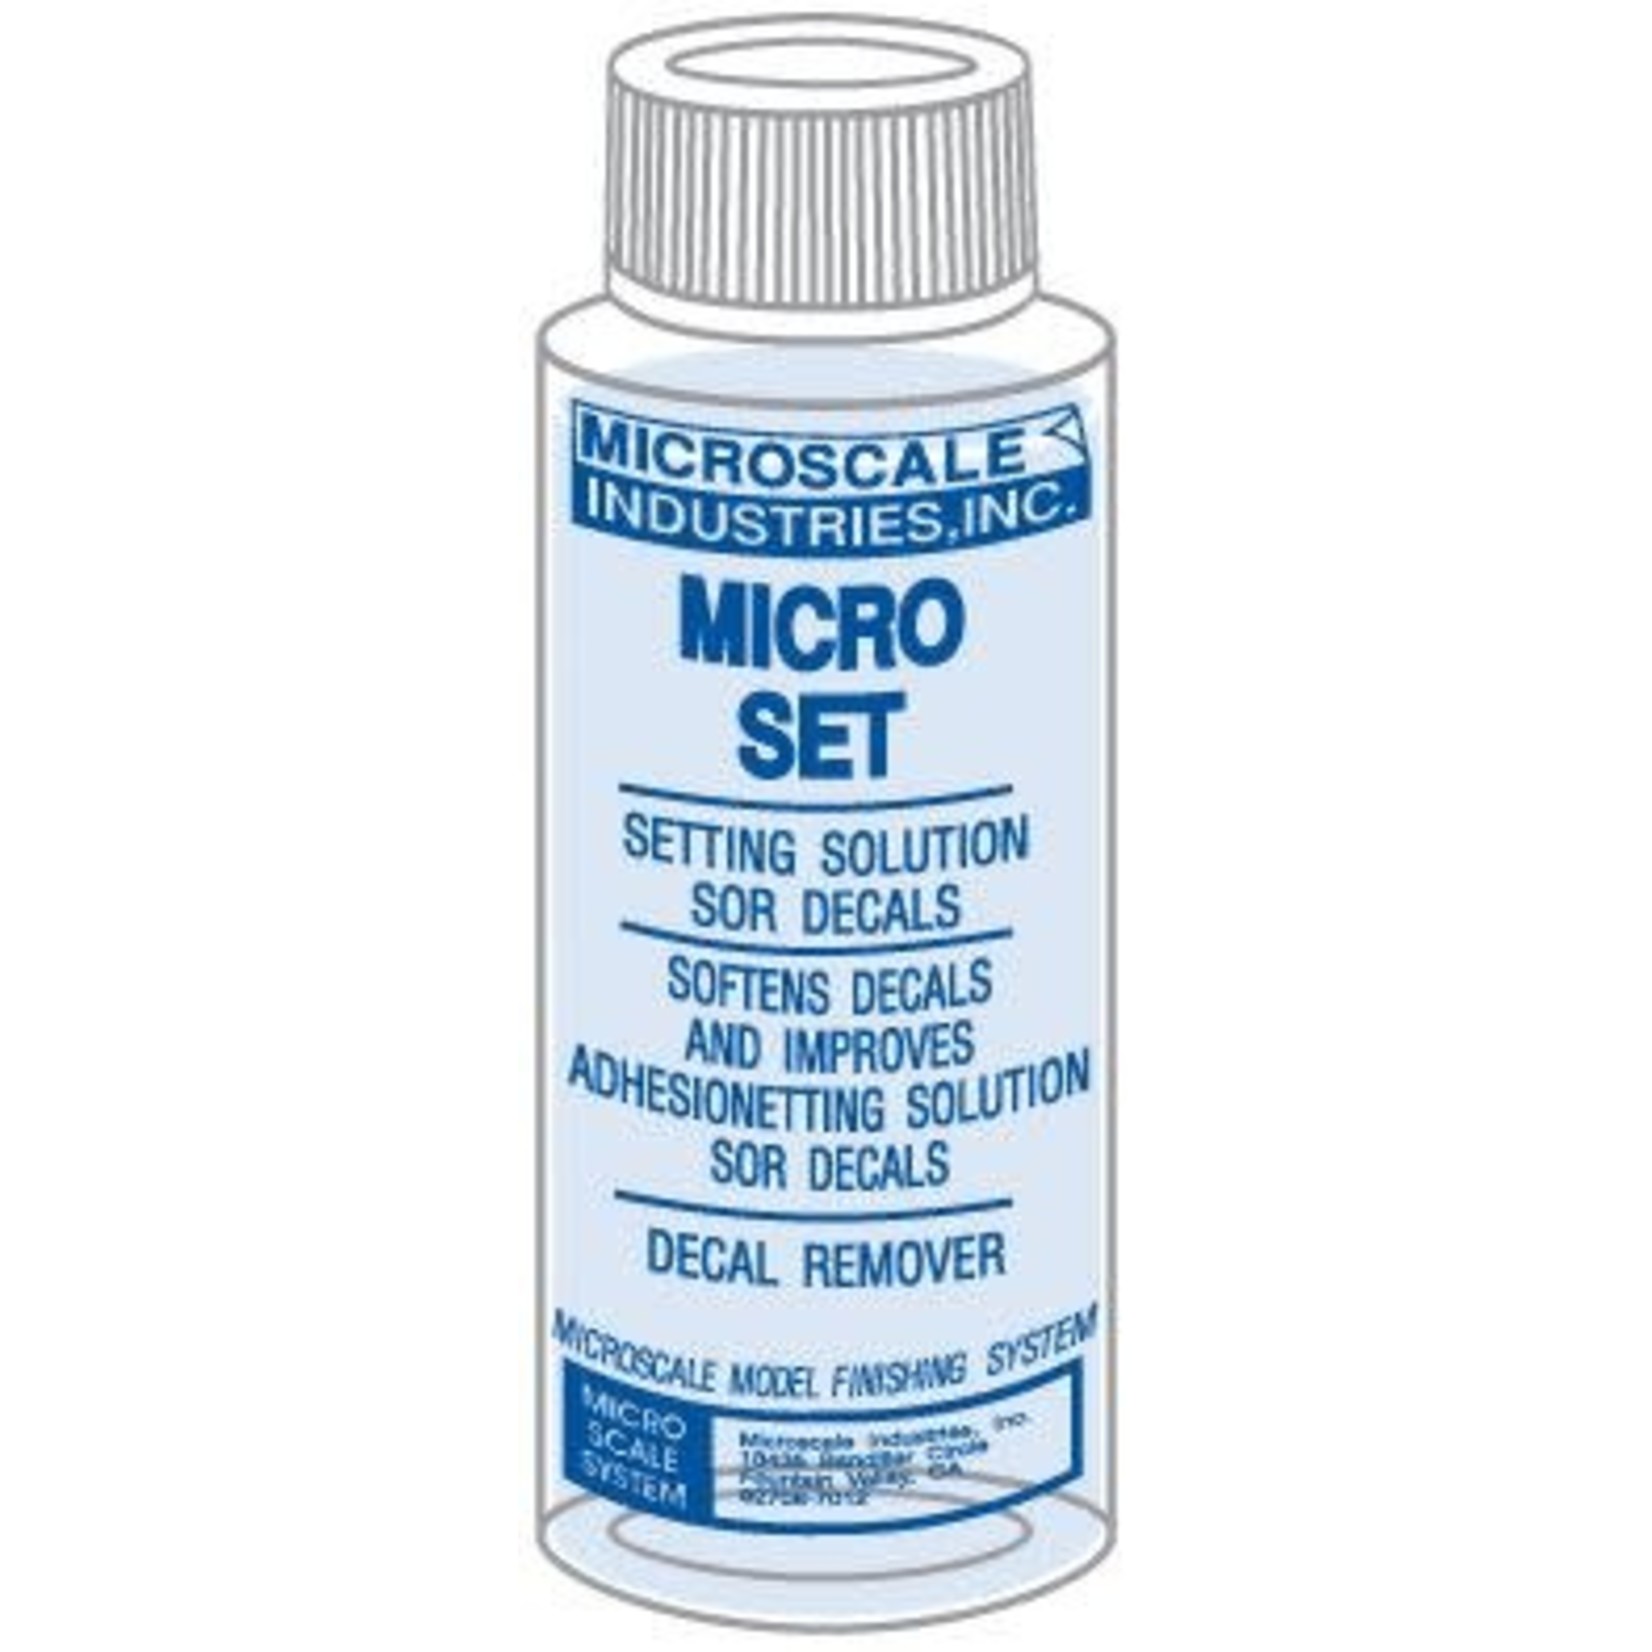 Microscale Microscale MI-1 Micro Set 30ml